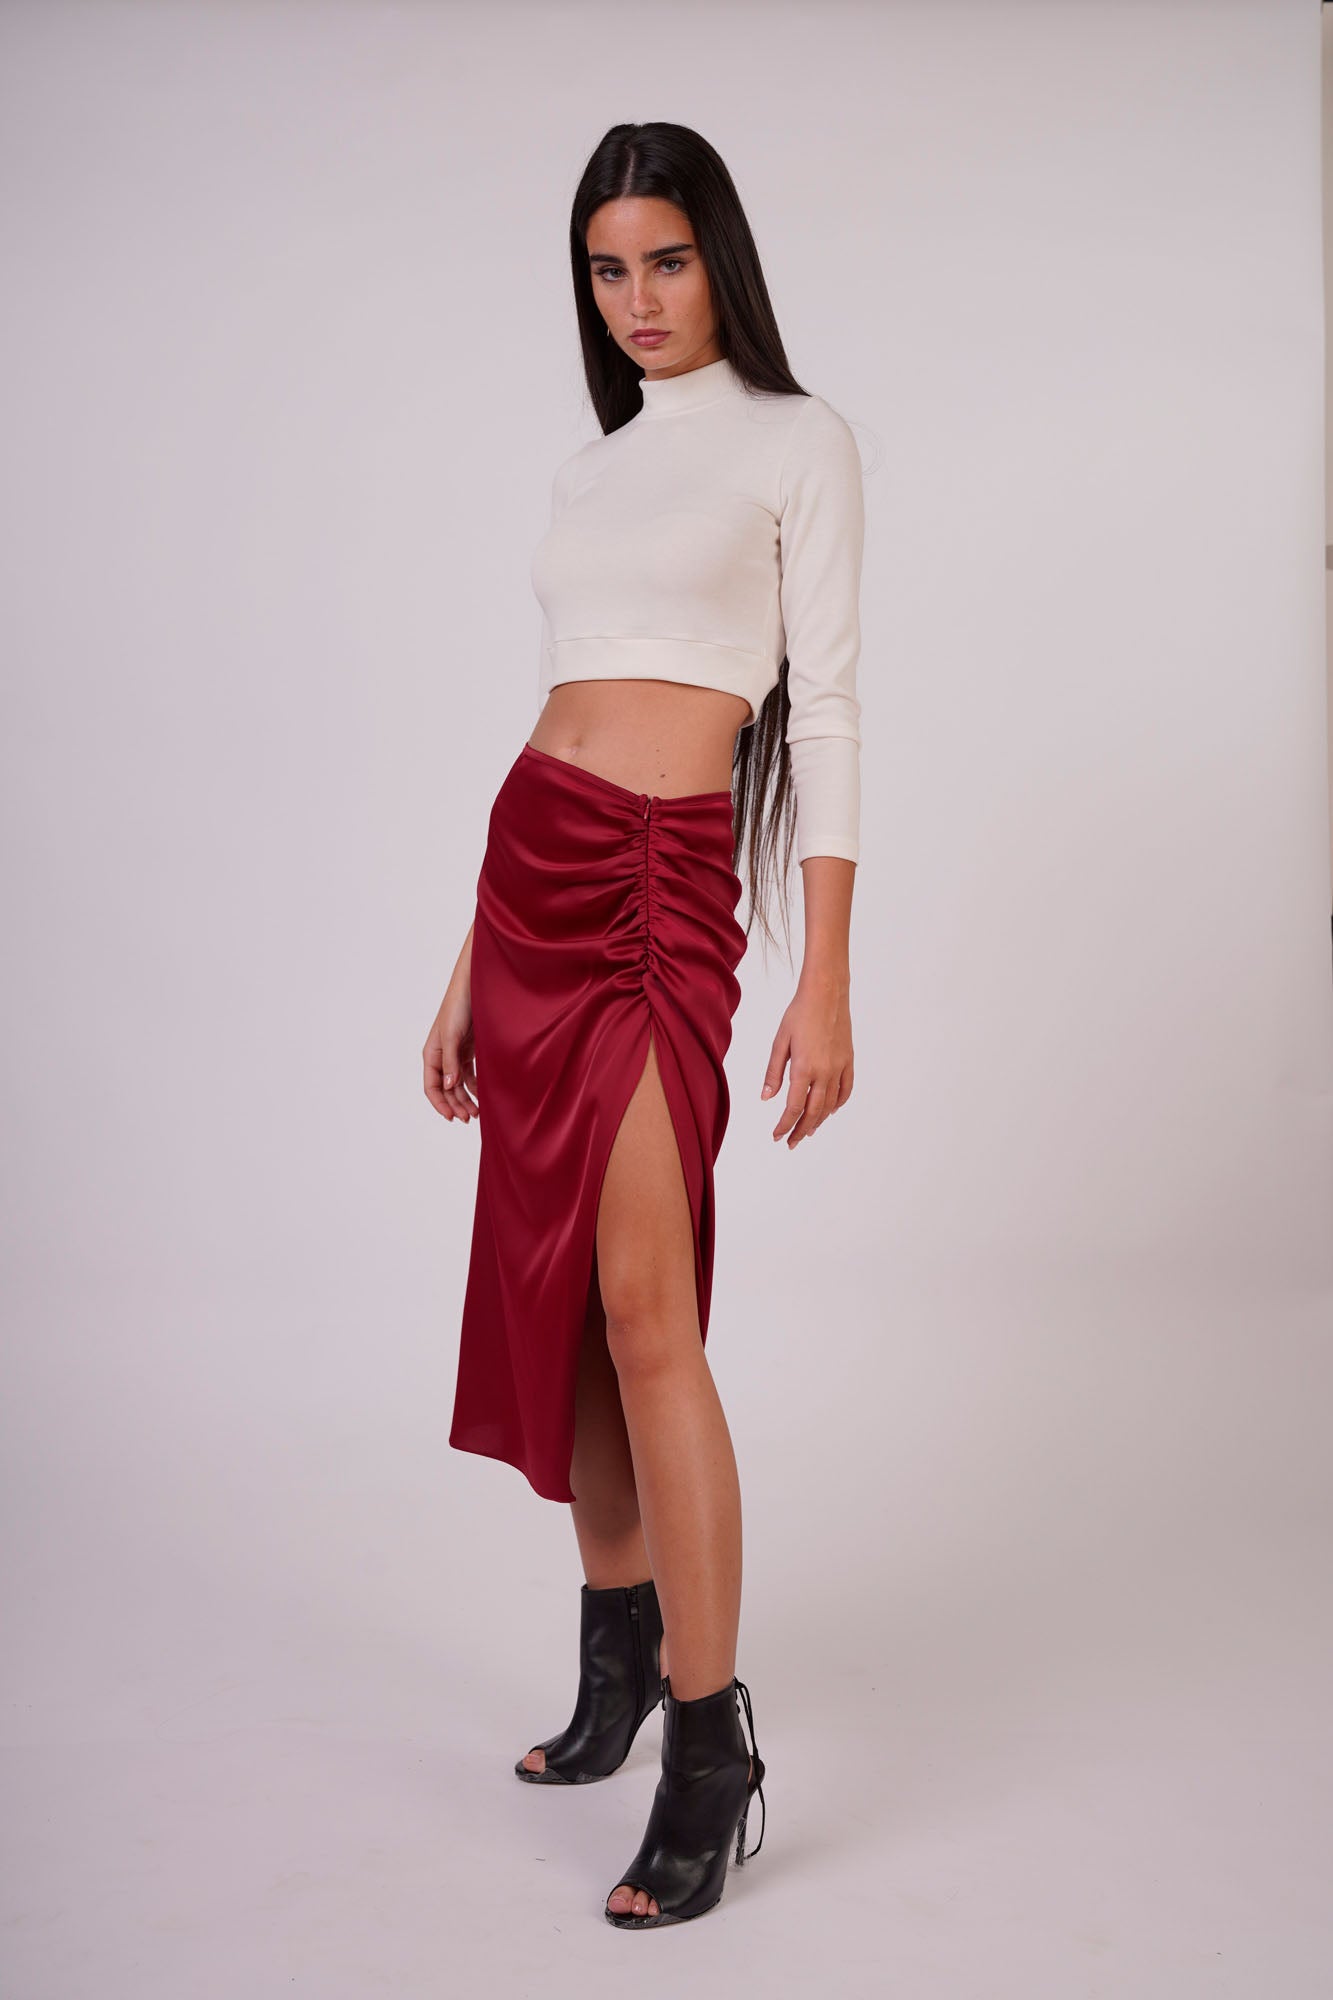 Satin Gathered Skirt with Side Slit